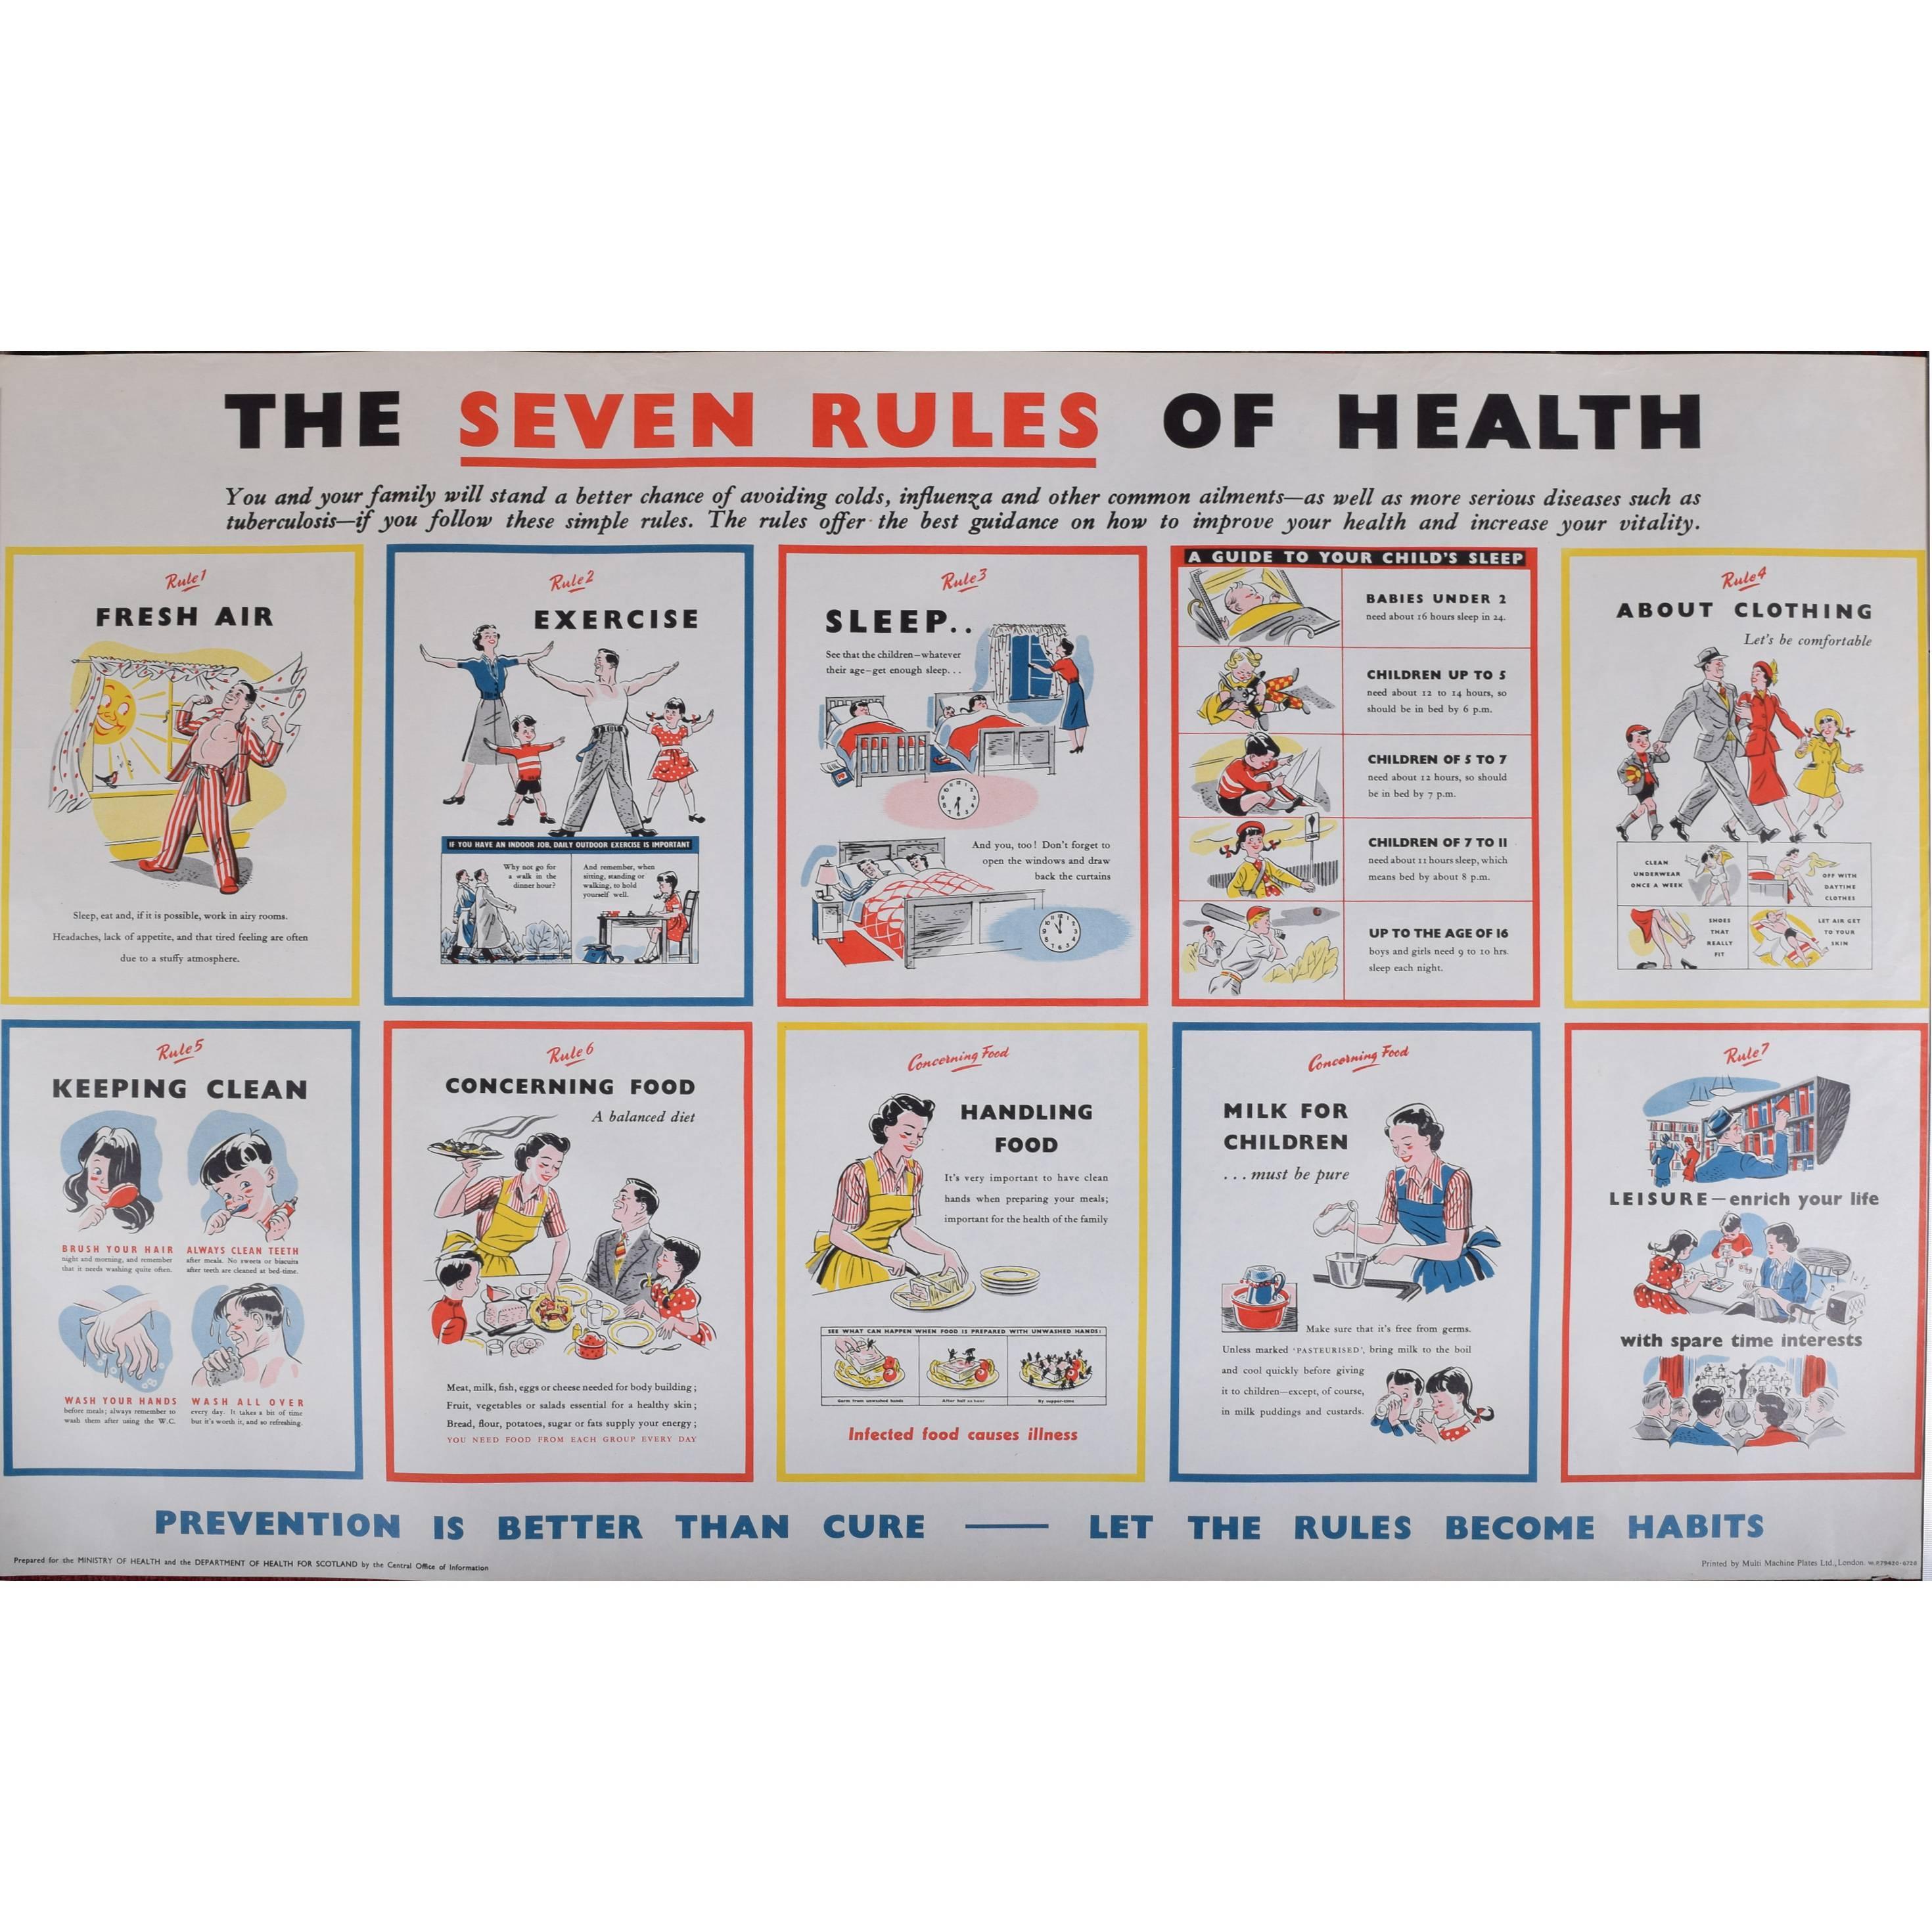 Unknown Print - The Seven Rules of Health UK British Government Propaganda Poster HMSO c1950